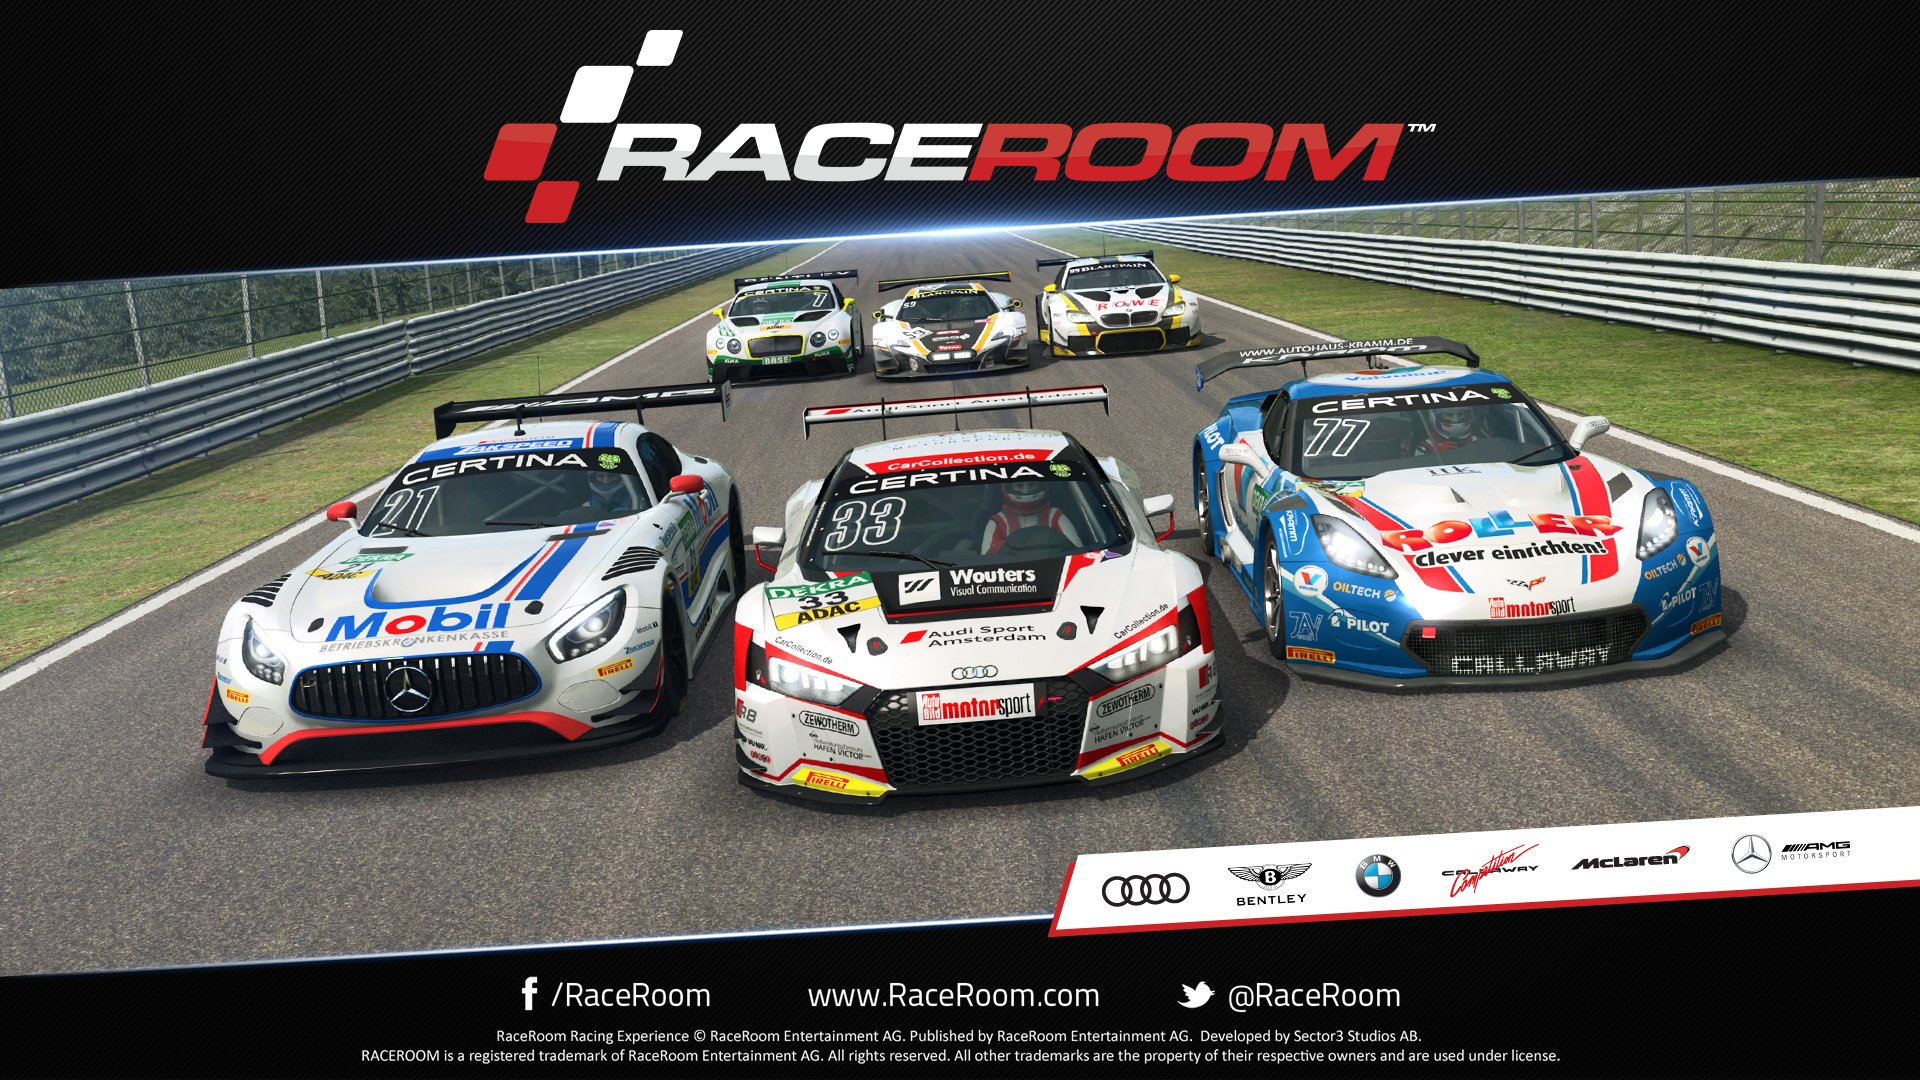 More information about "Raceroom: nuovo development update di Marzo dai Sector3"